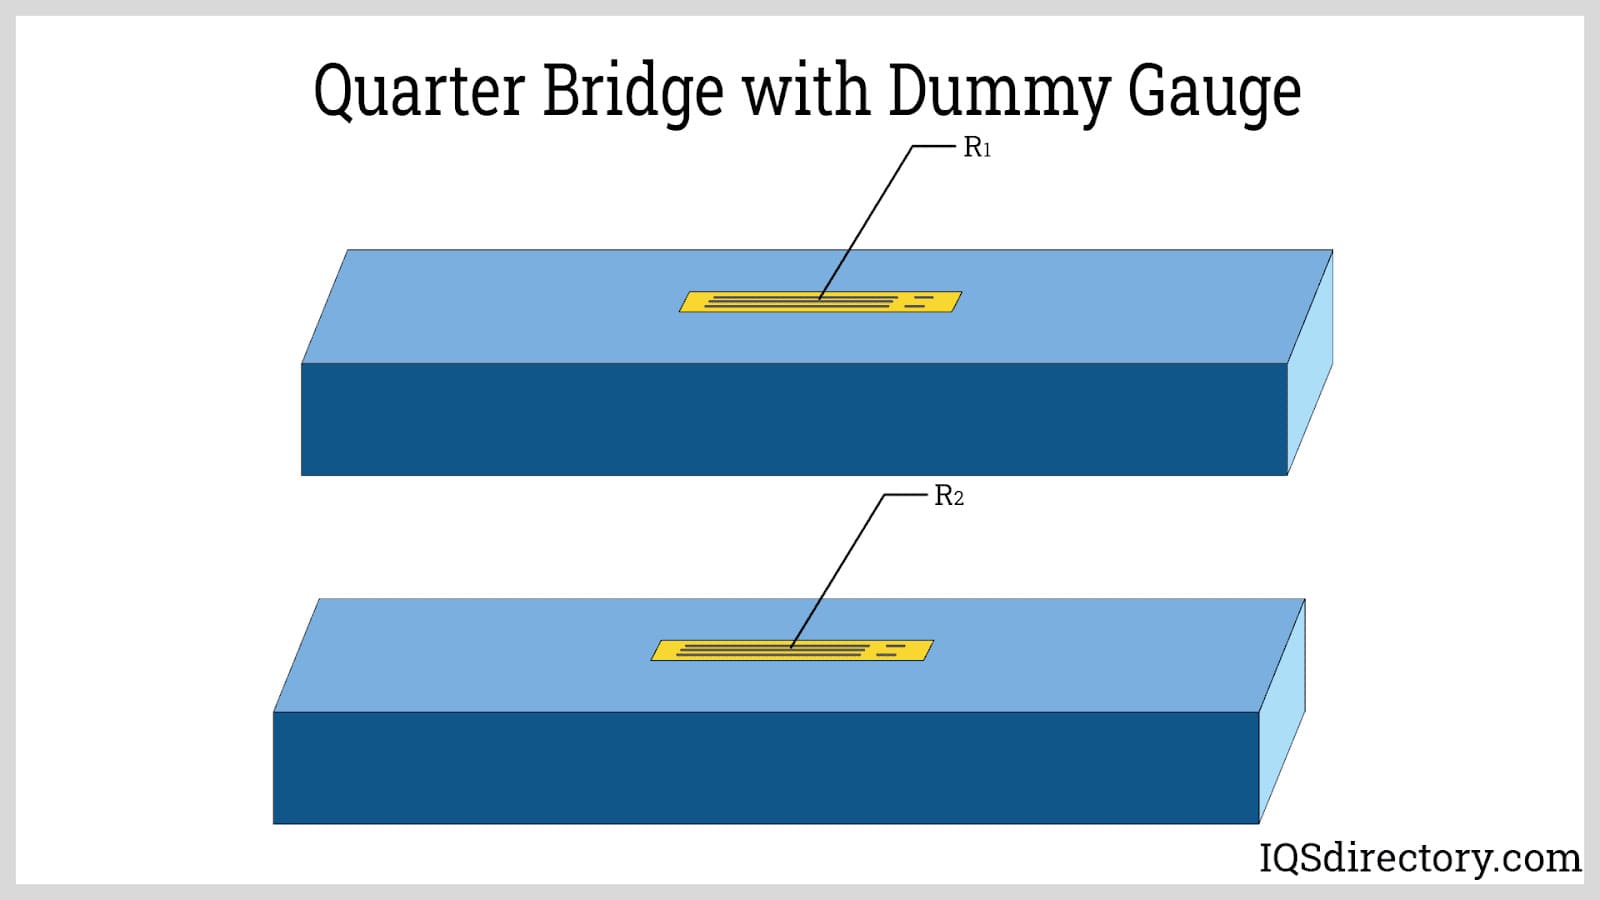 Quarter Bridge with Dummy Gauge